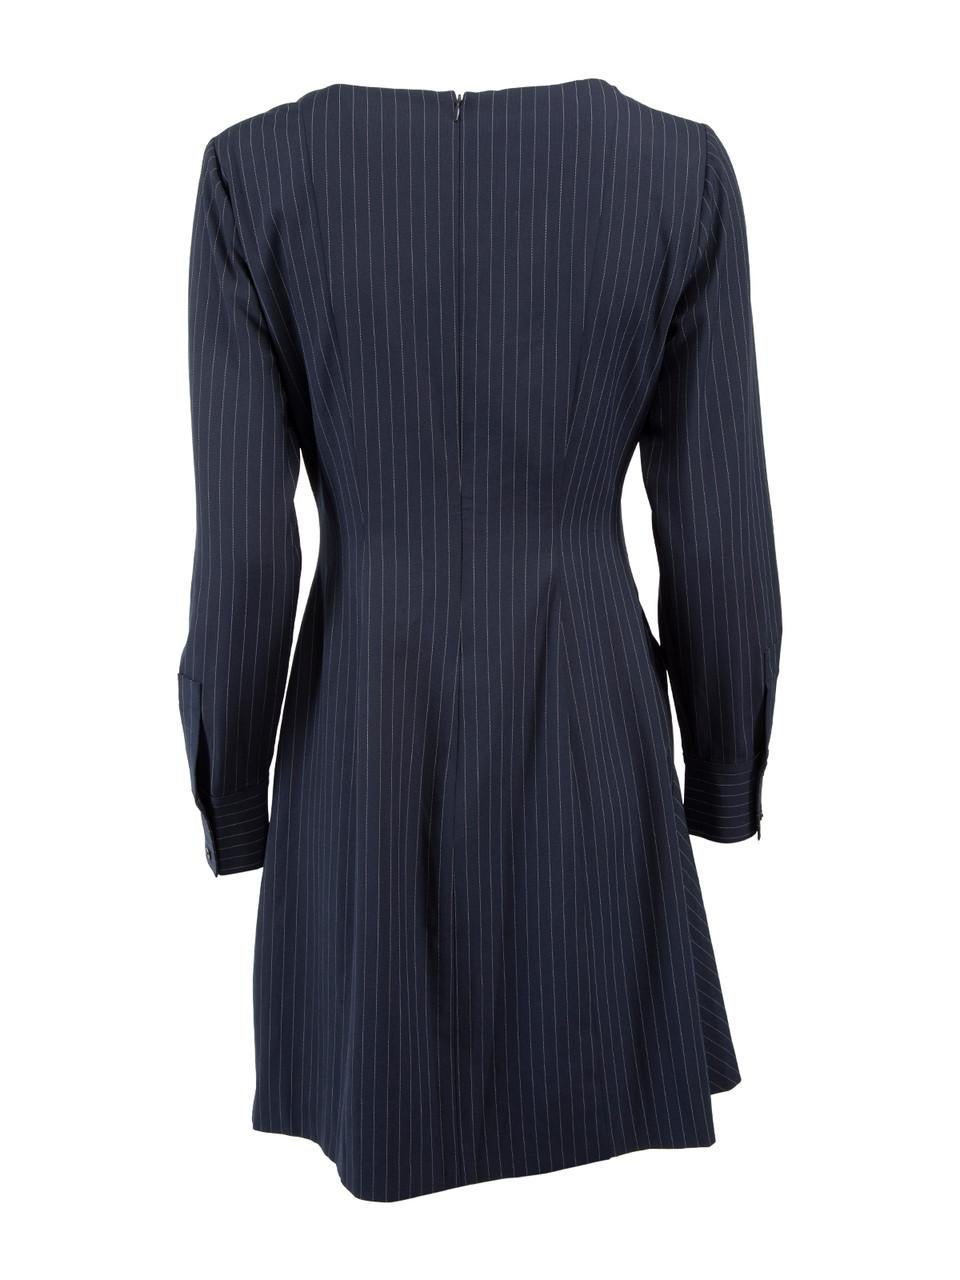 Club Monaco Navy Pinstripe Dress Size S In New Condition In London, GB